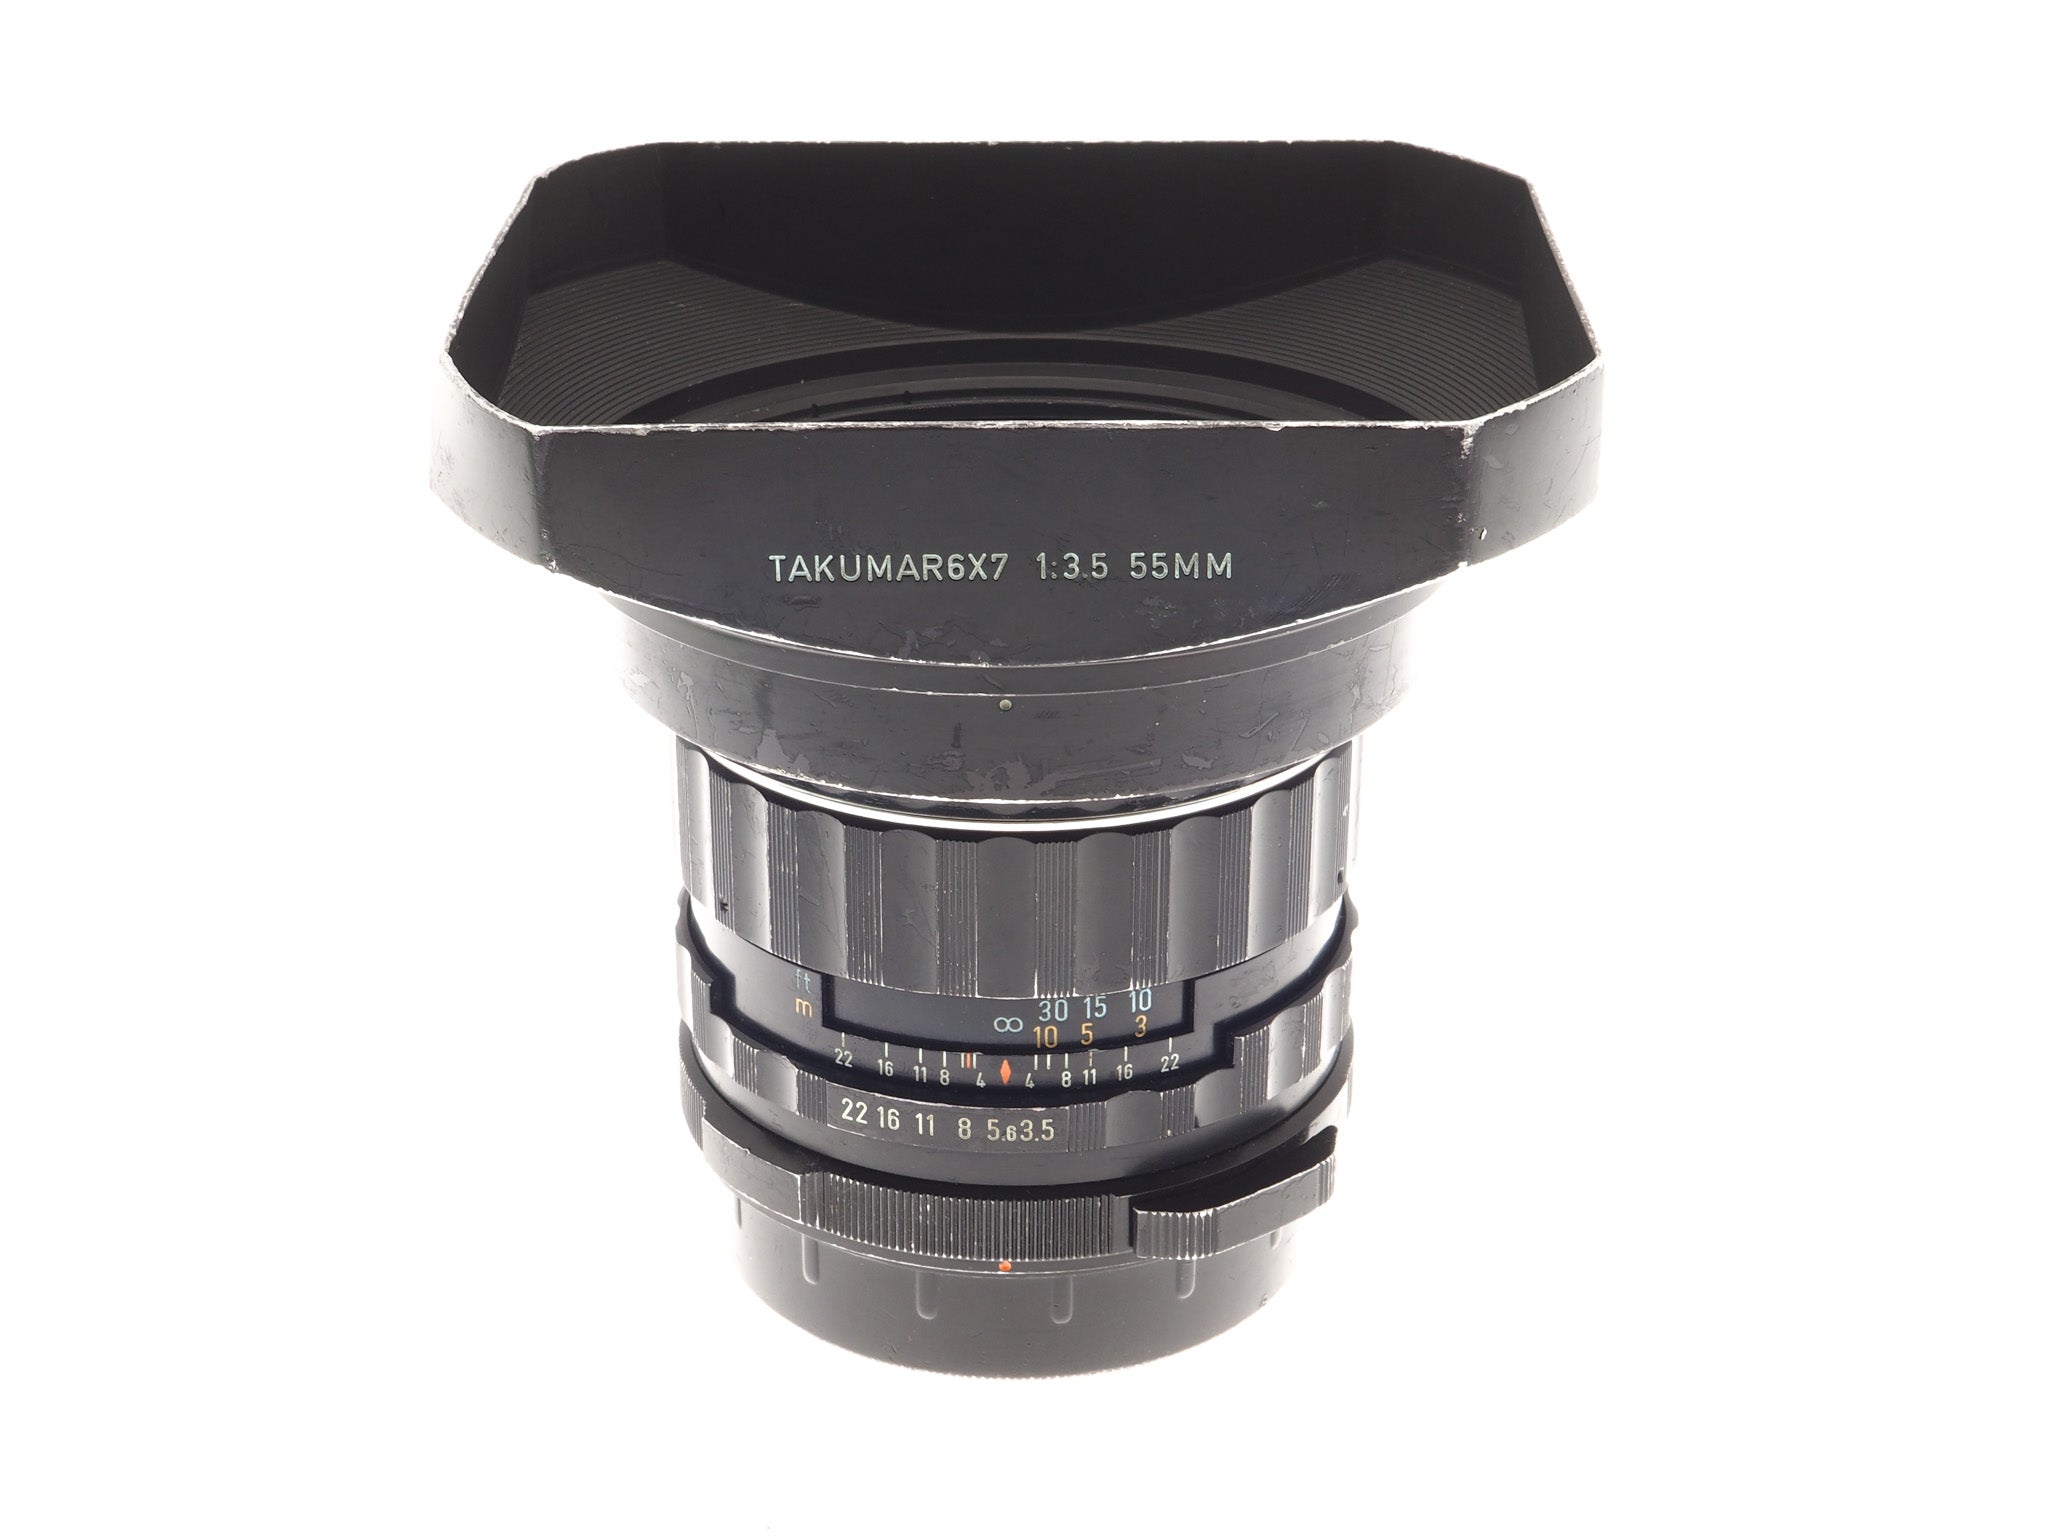 Pentax 55mm f3.5 Super-Multi-Coated Takumar 6X7 - Lens